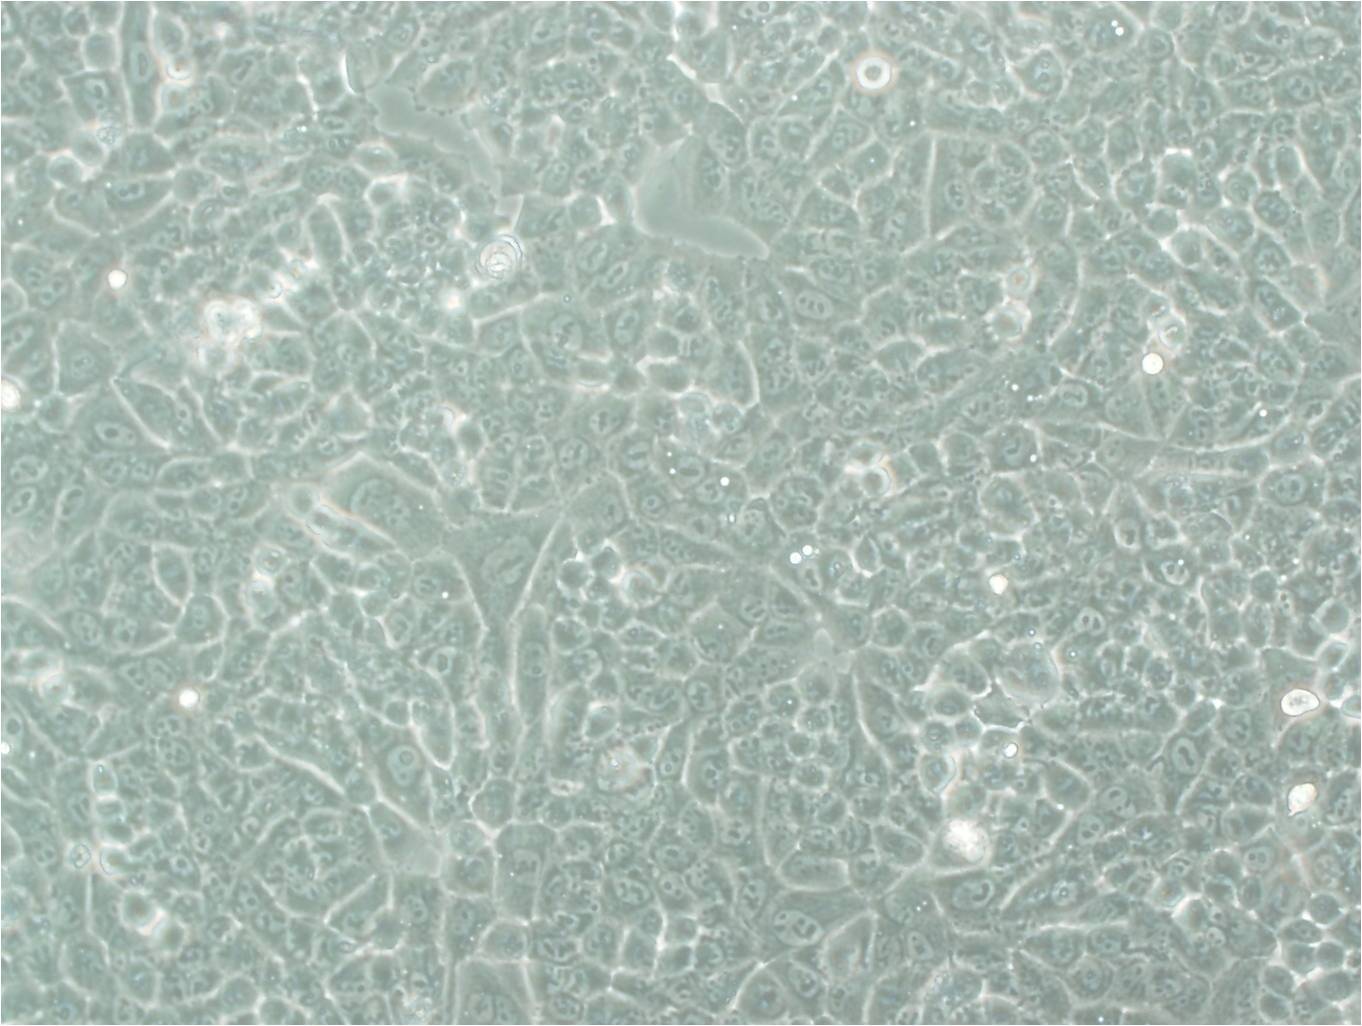 SH-SY5Y Cells|人神经母细胞瘤克隆细胞(包送STR鉴定报告)